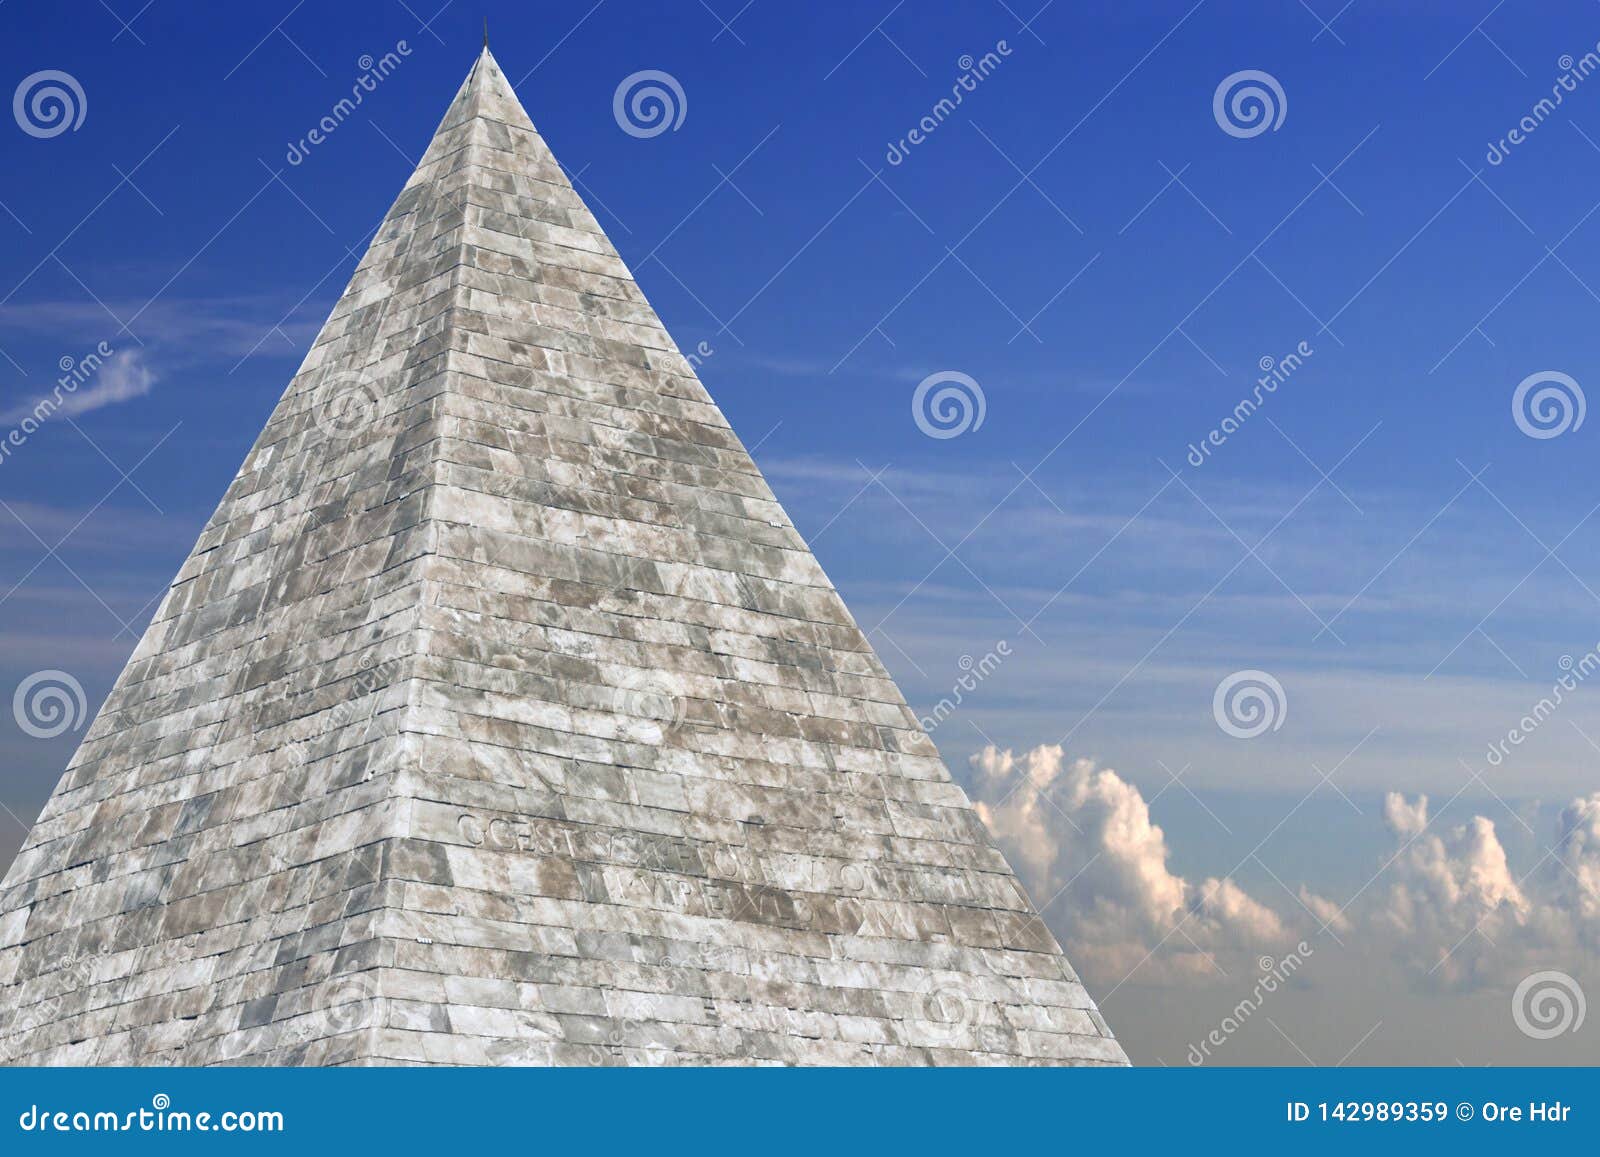 piramide cestia pyramid of cestius, rome, italy,